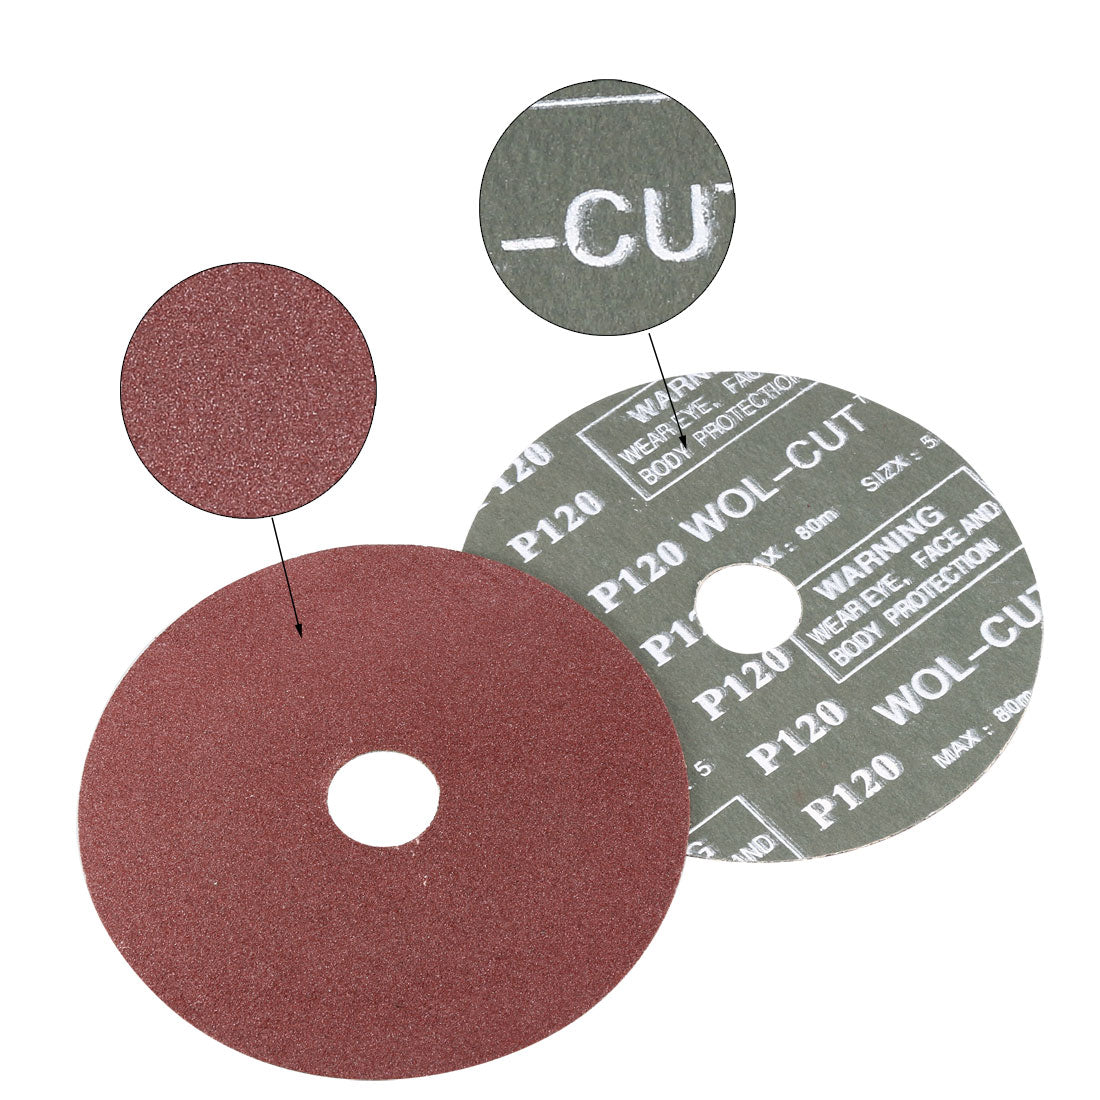 Uxcell Uxcell 5-Inch x 7/8-Inch Aluminum Oxide Resin Fiber Discs, Center Hole 120 Grit Sanding Grinding Discs, 10 Pcs